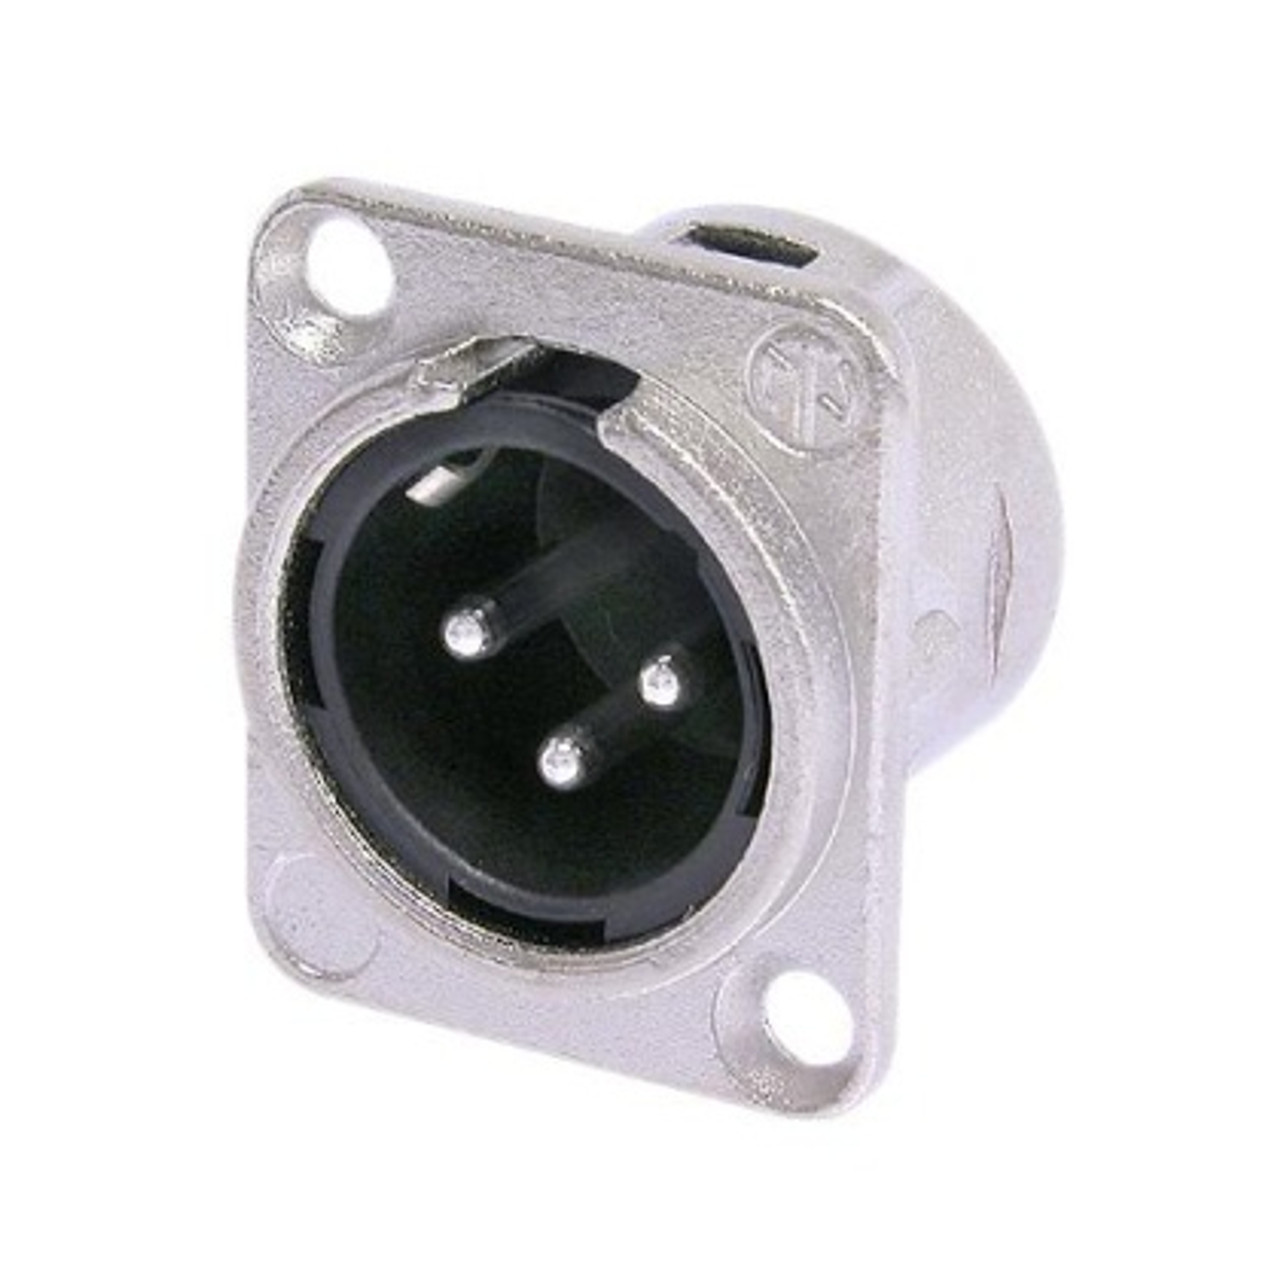 Neutrik DL Series 3 Pin XLR Panel Socket - Male